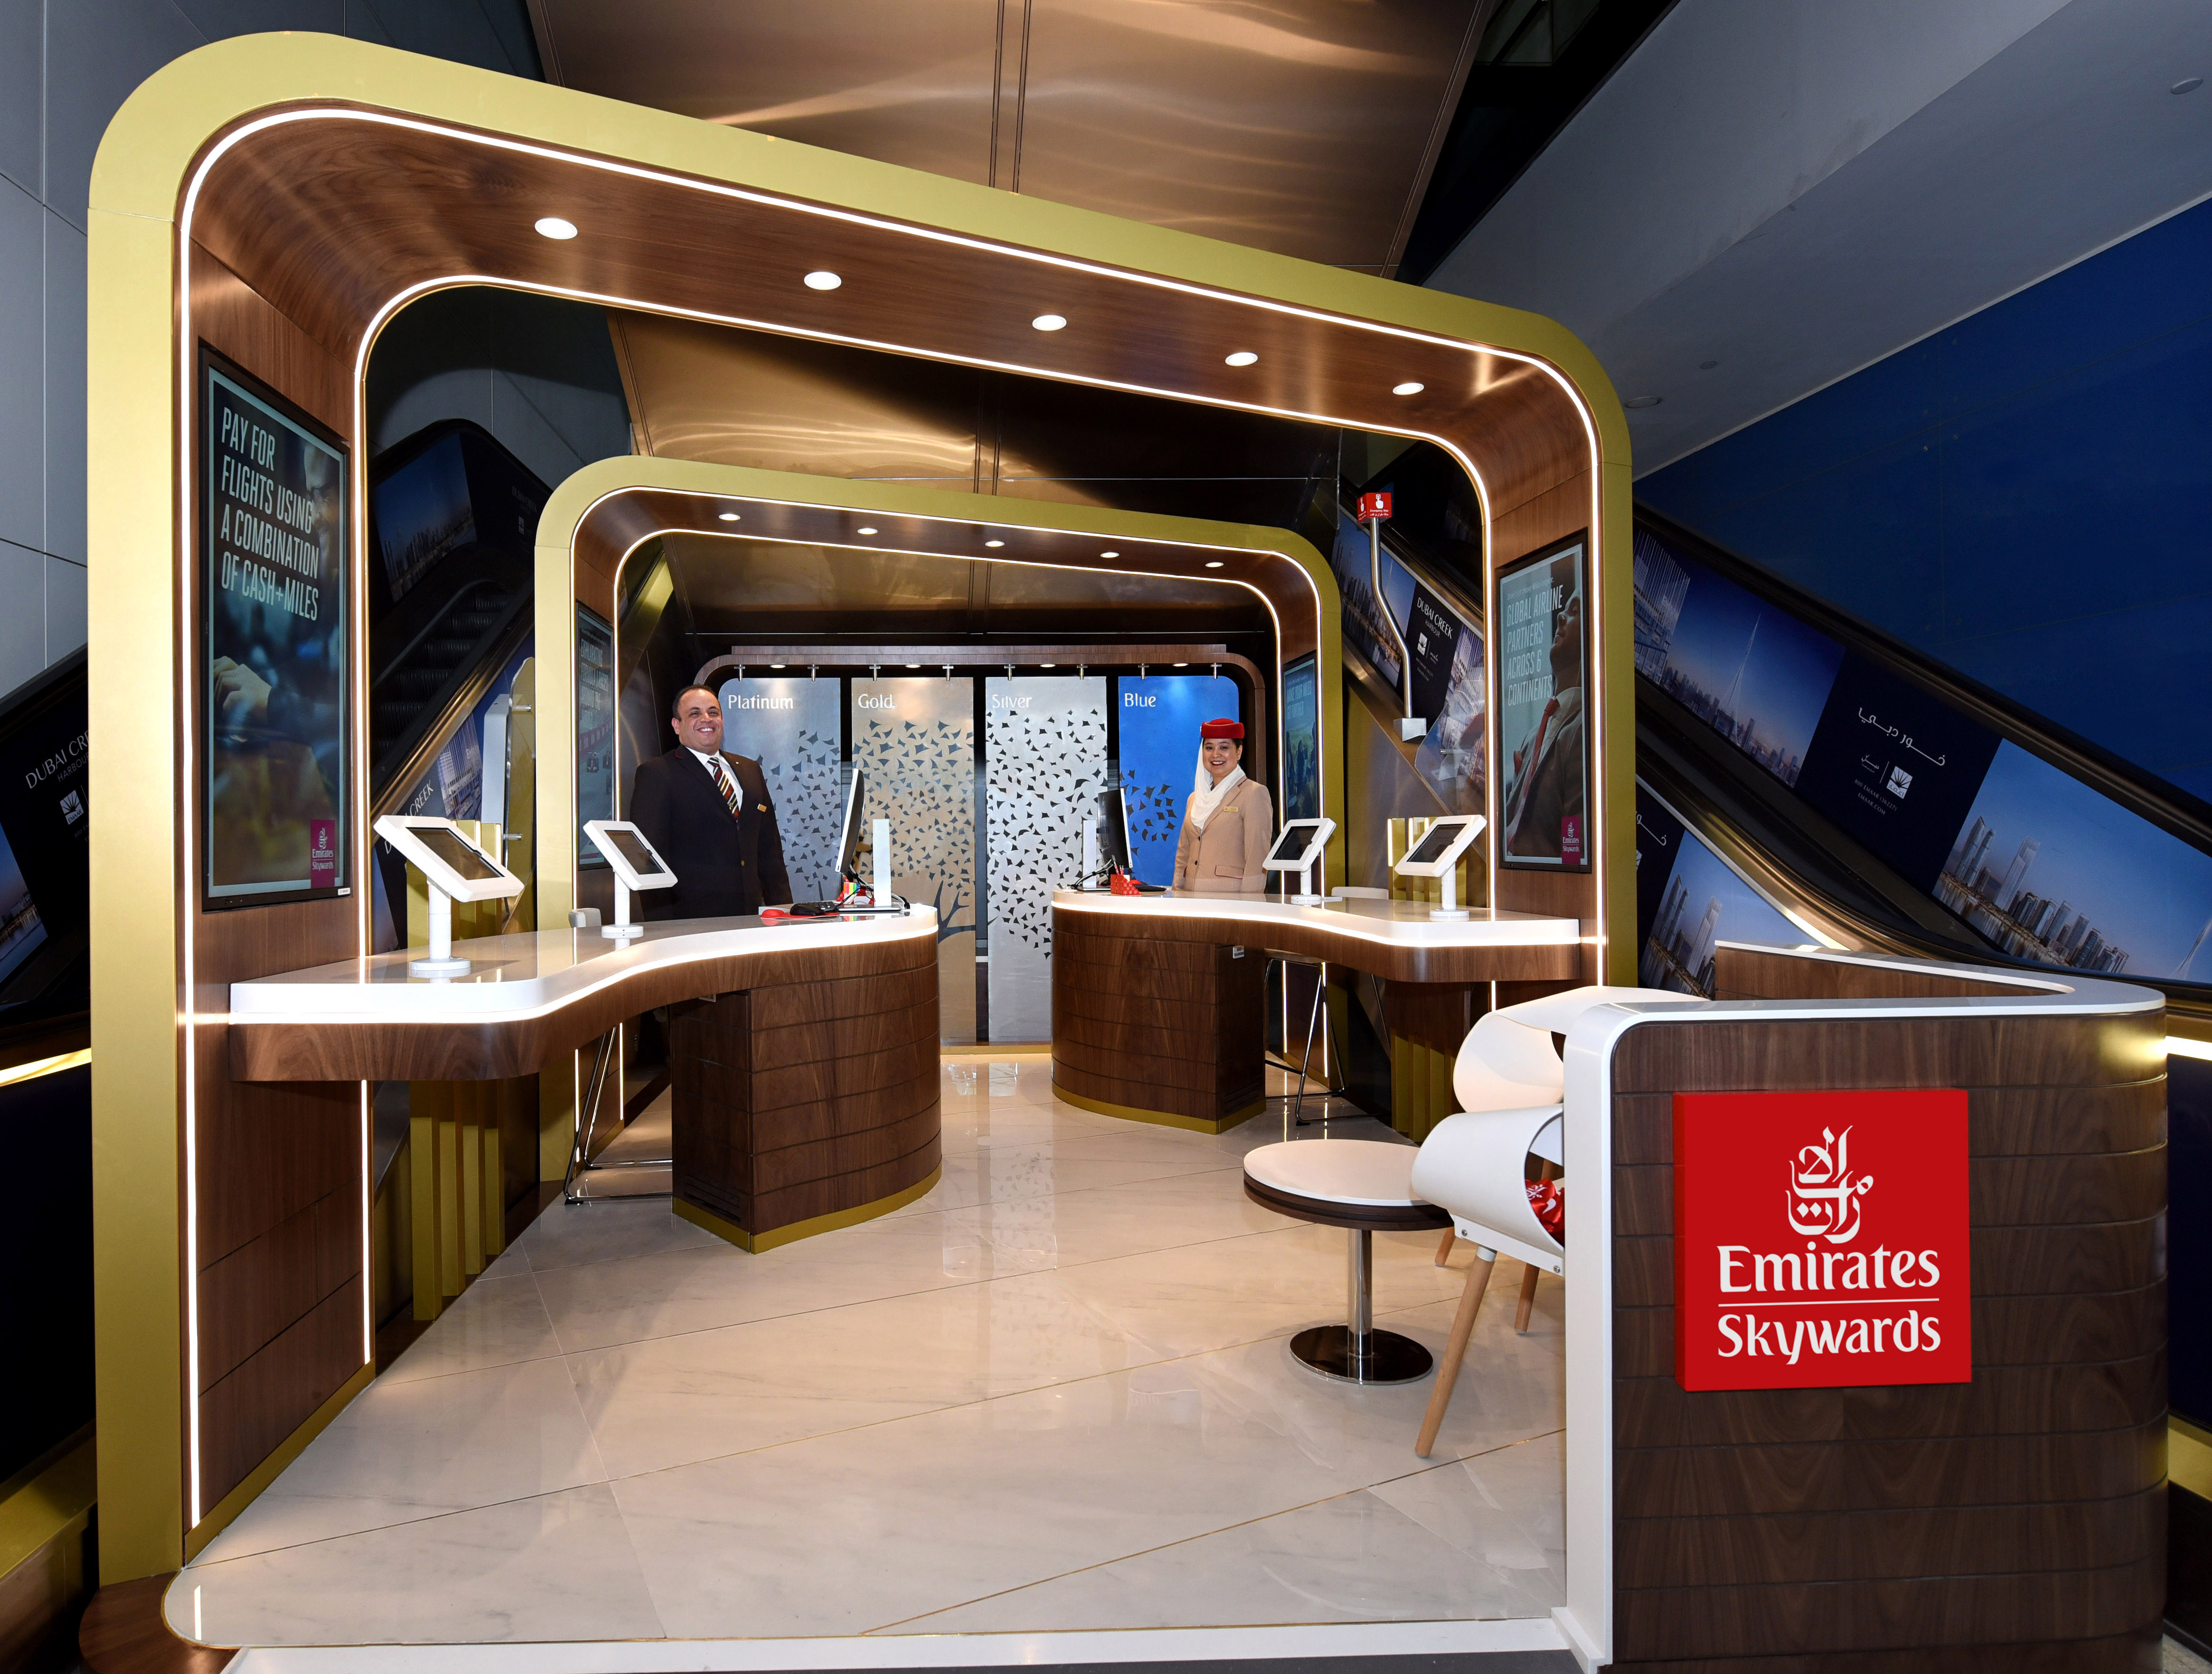 Emirates Skywards' new customer help point at Dubai airport